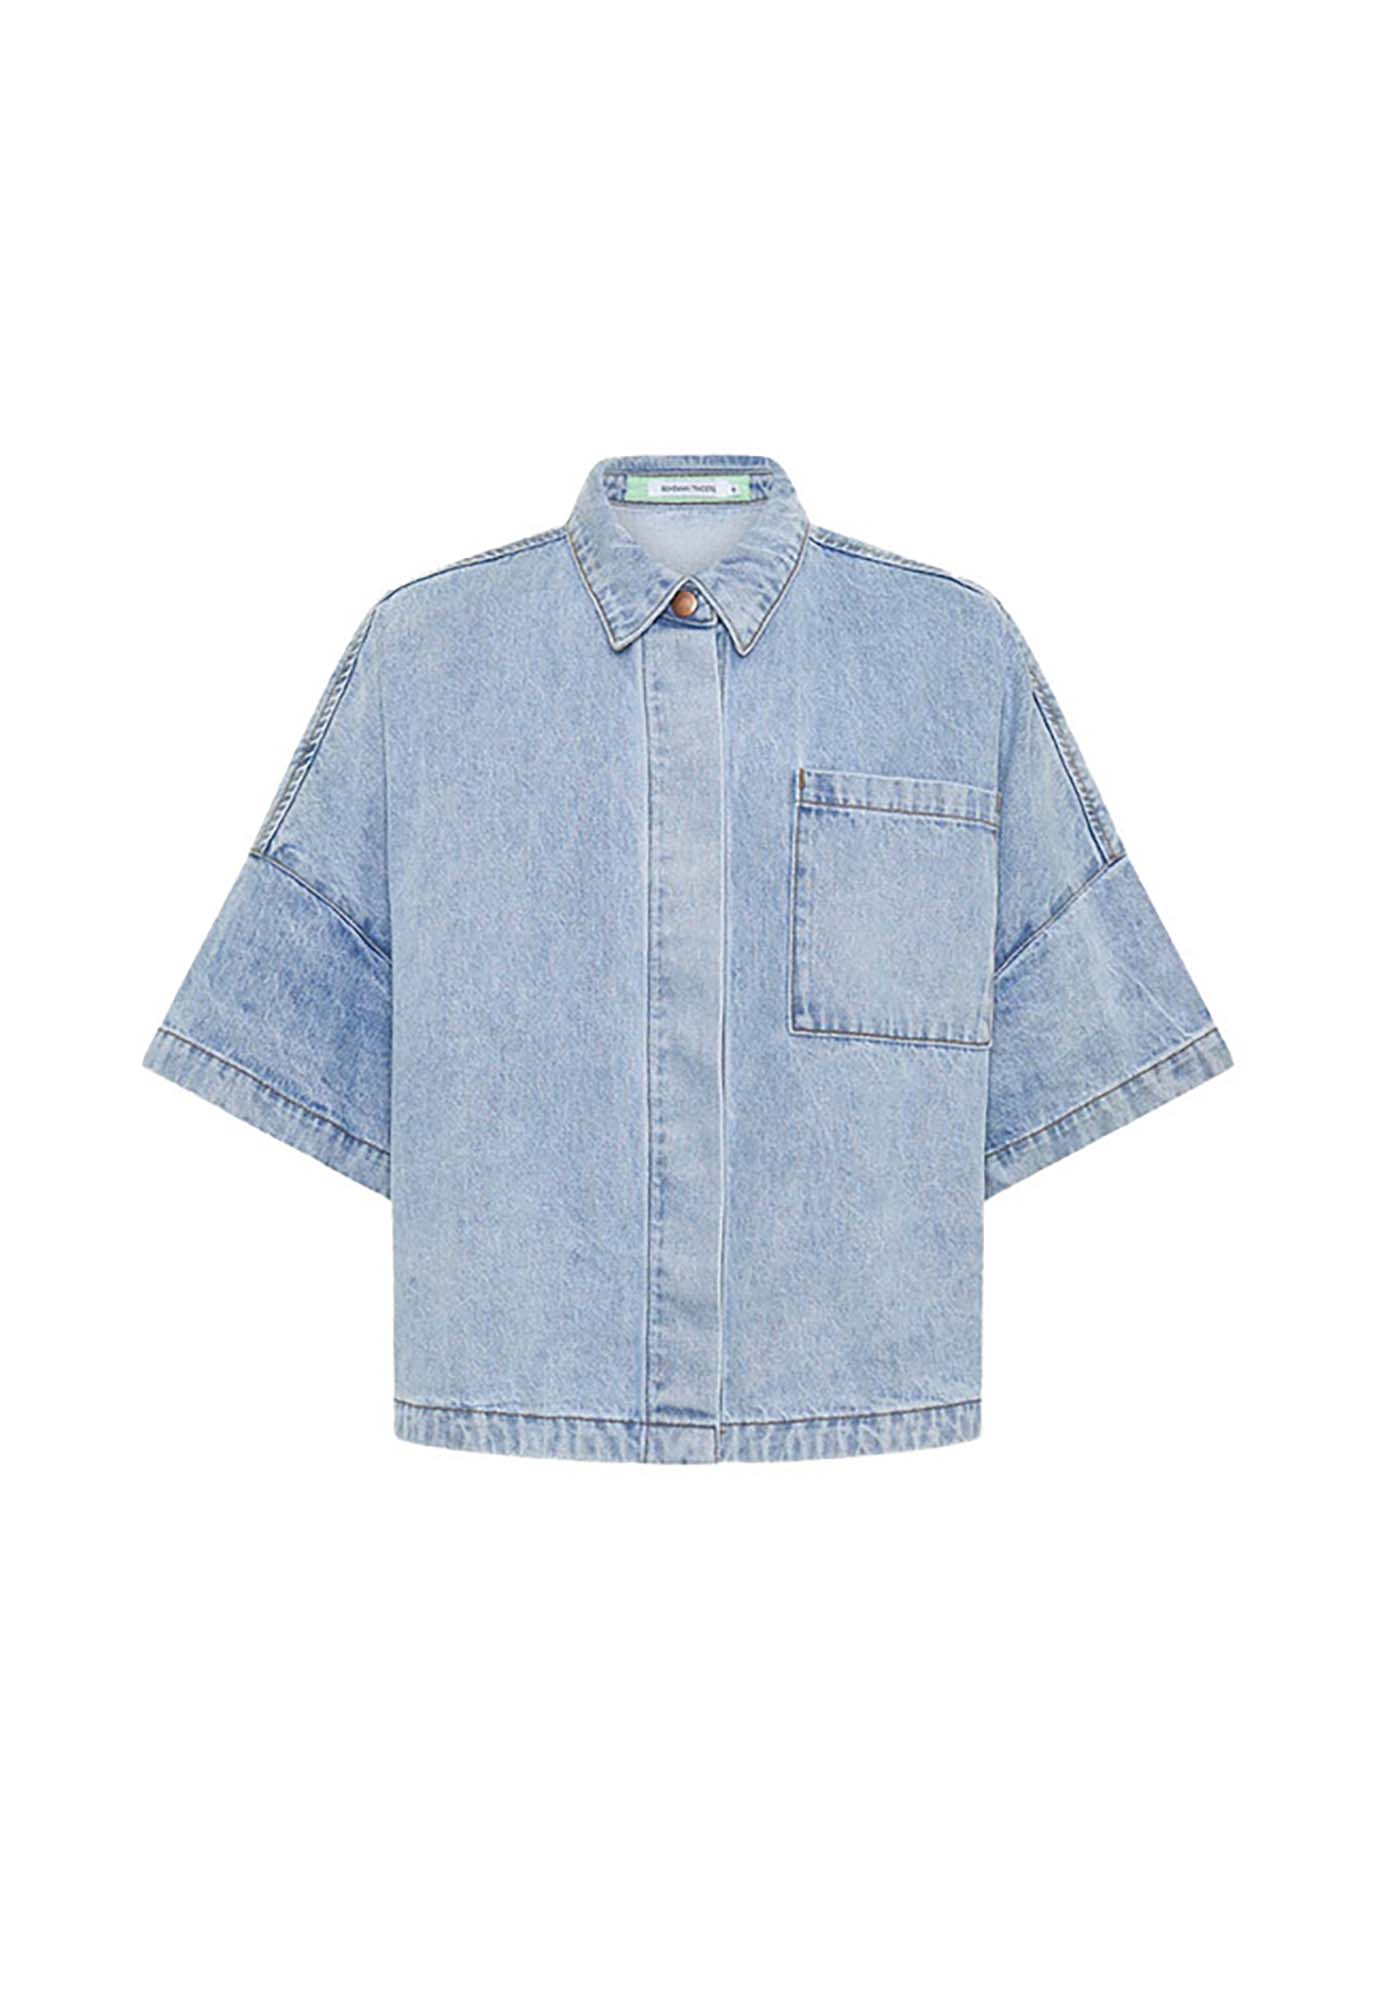 bohemian traders - short sleeve oversized denim shirt - ice blue